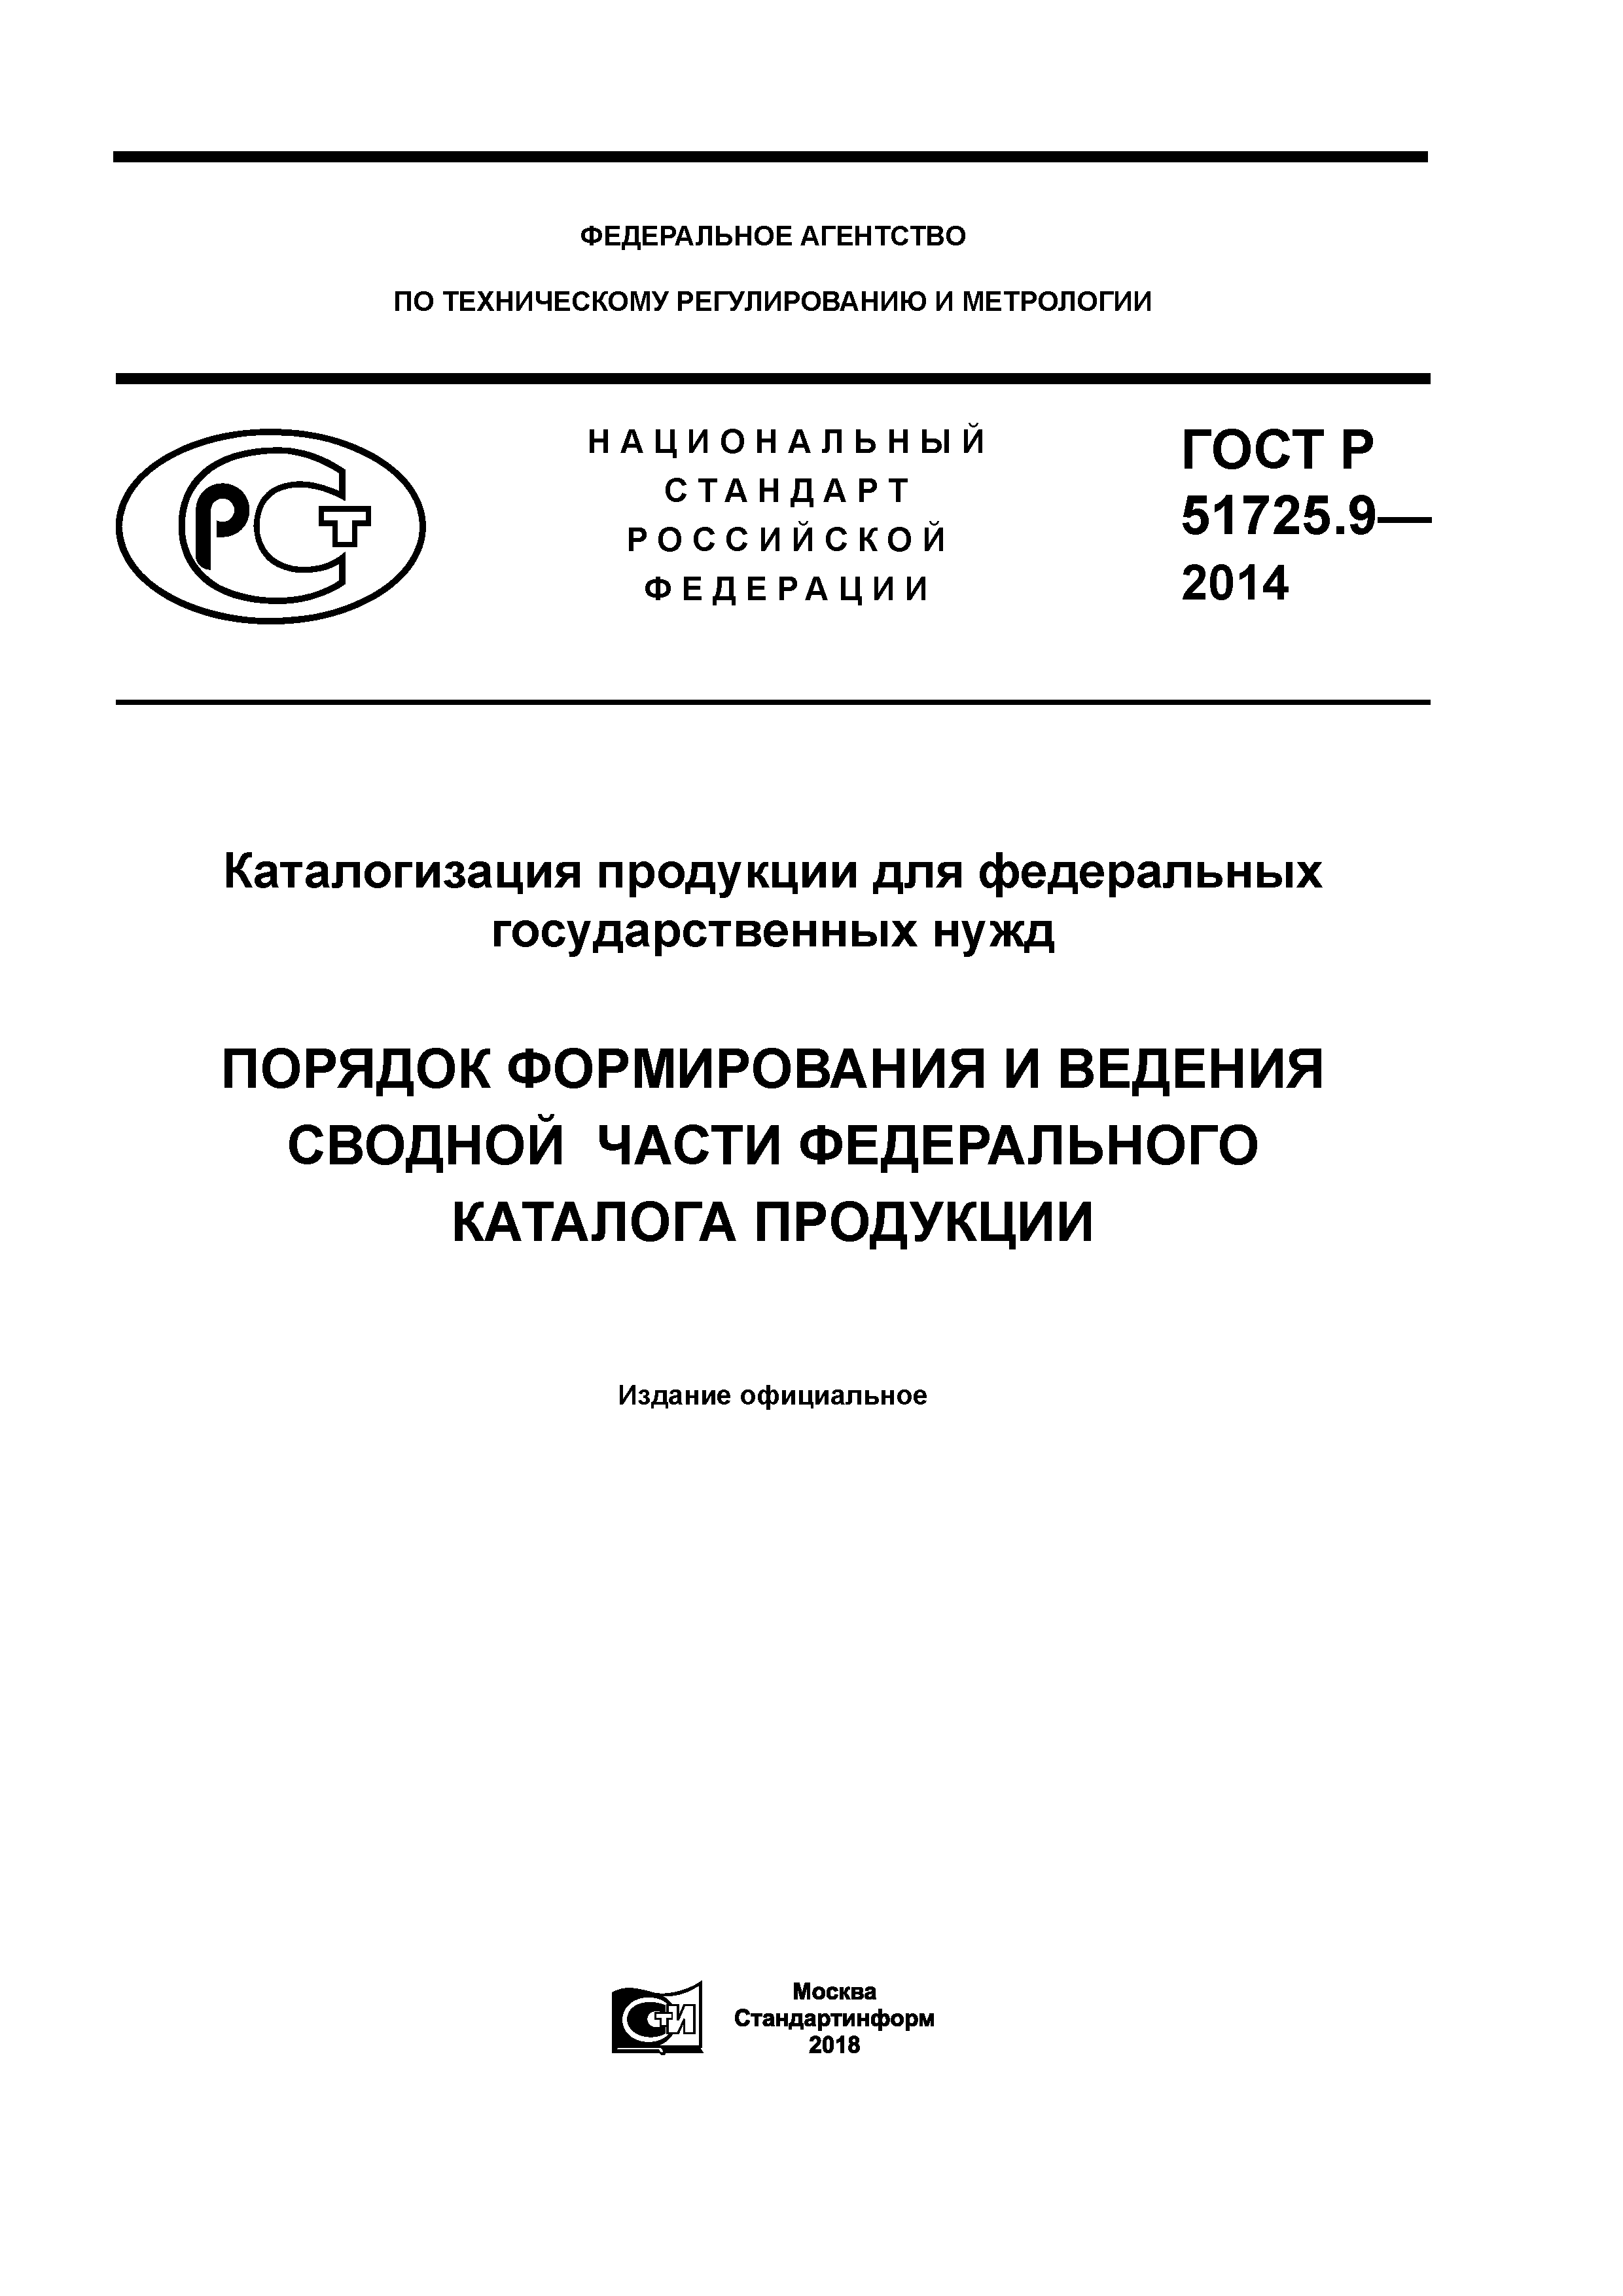 ГОСТ Р 51725.9-2014